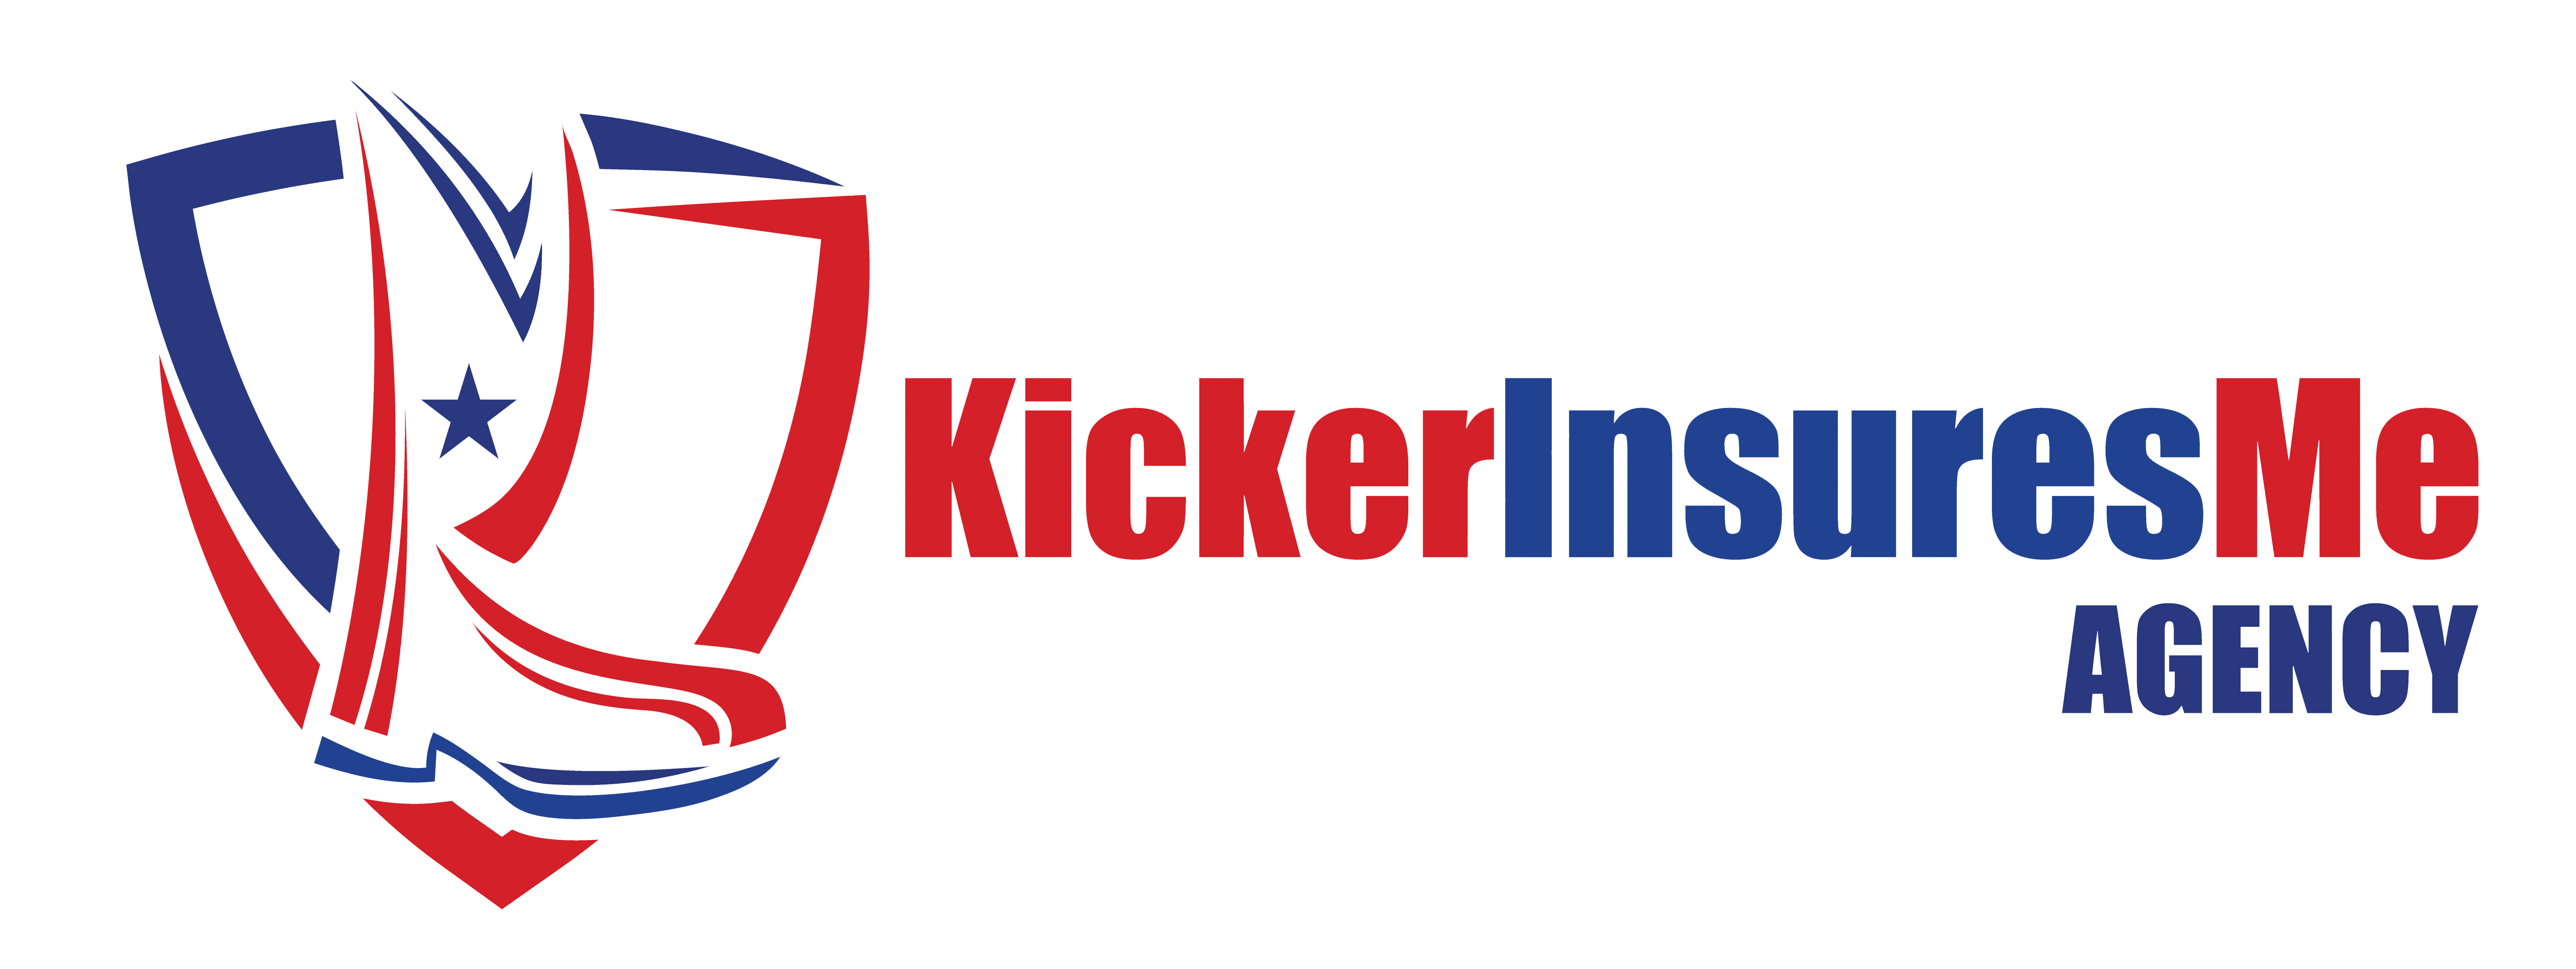 Kicker-Insures-Me-Agency-2023 (1)